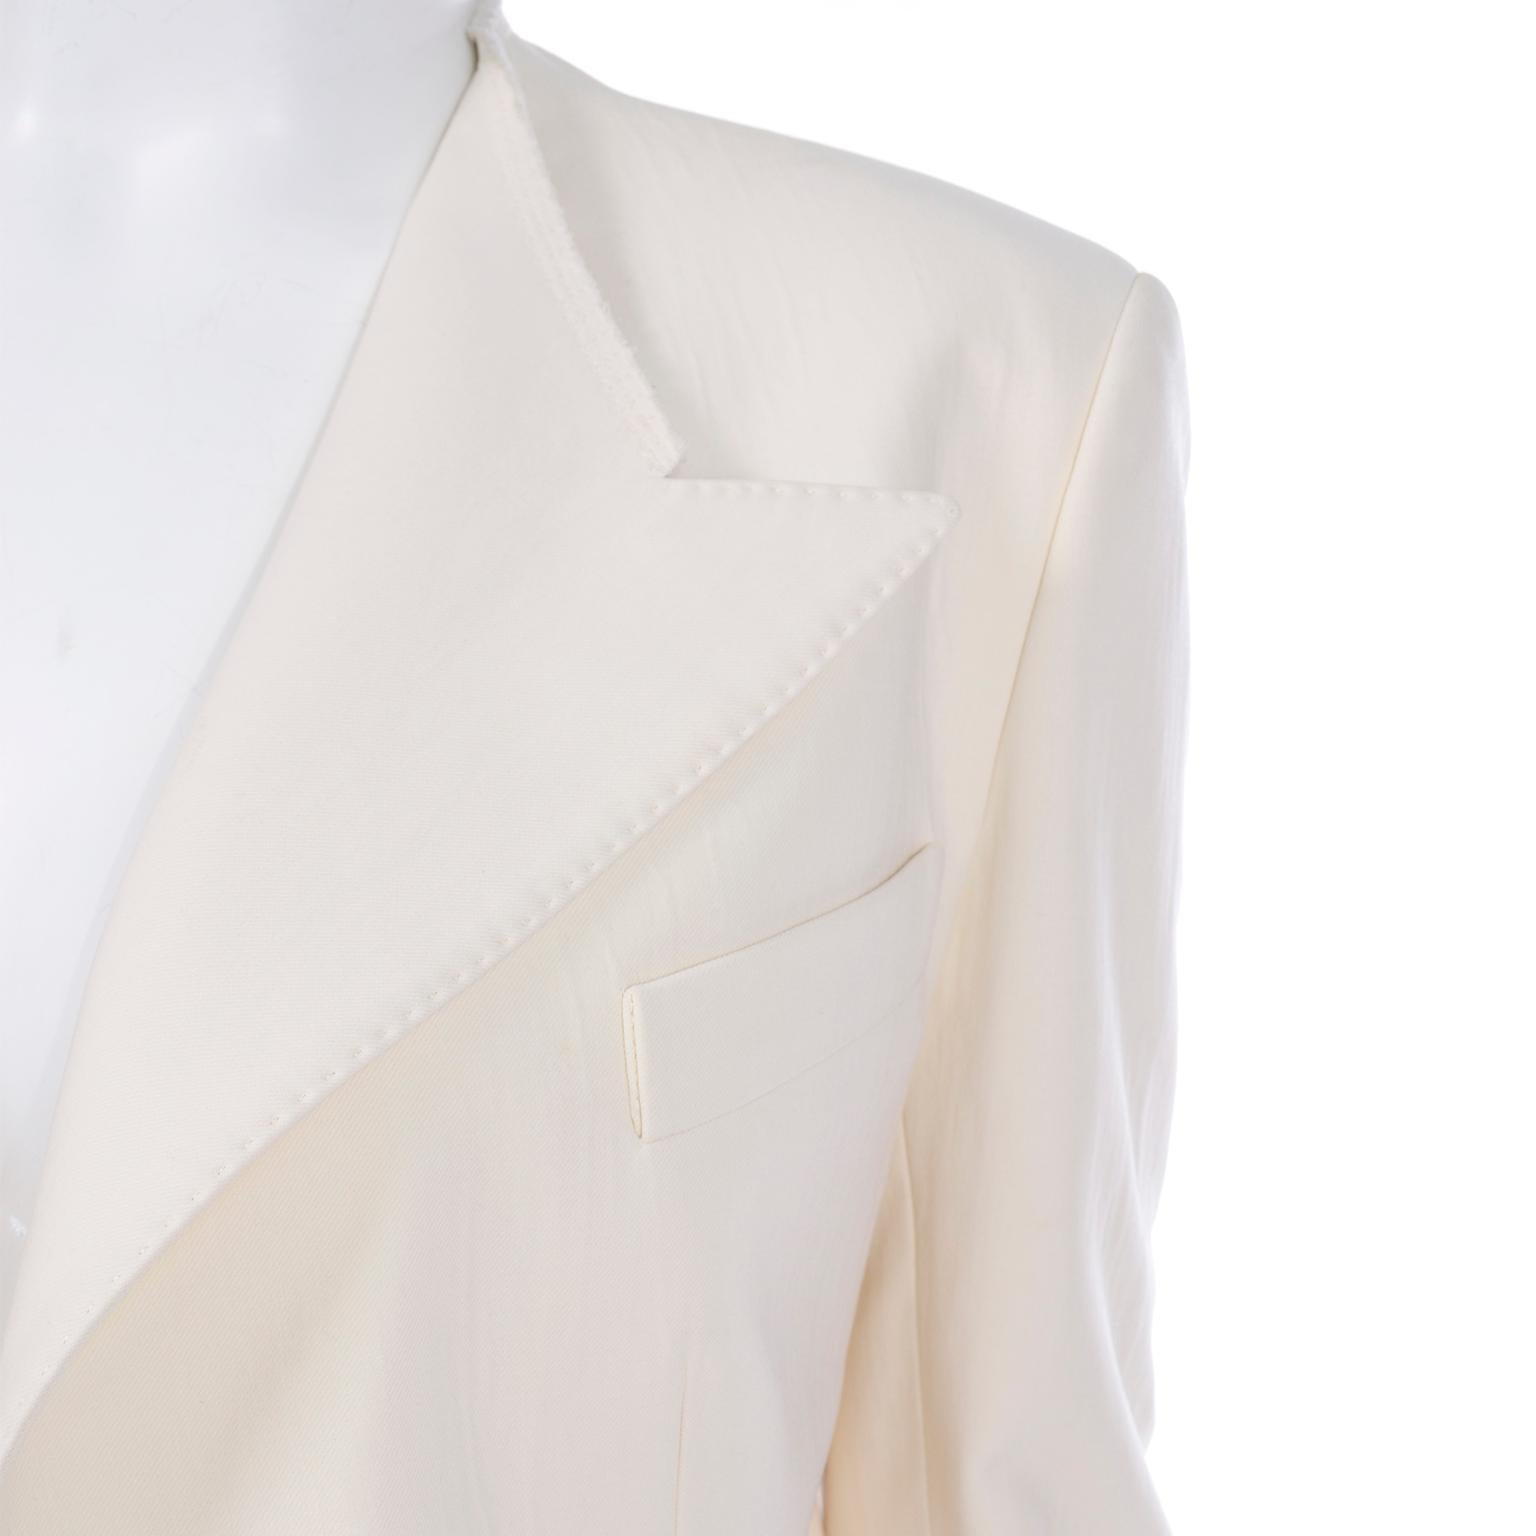 Alber Elbaz Lanvin Spring 2015 Cream Cutaway Tuxedo Style Jacket 2